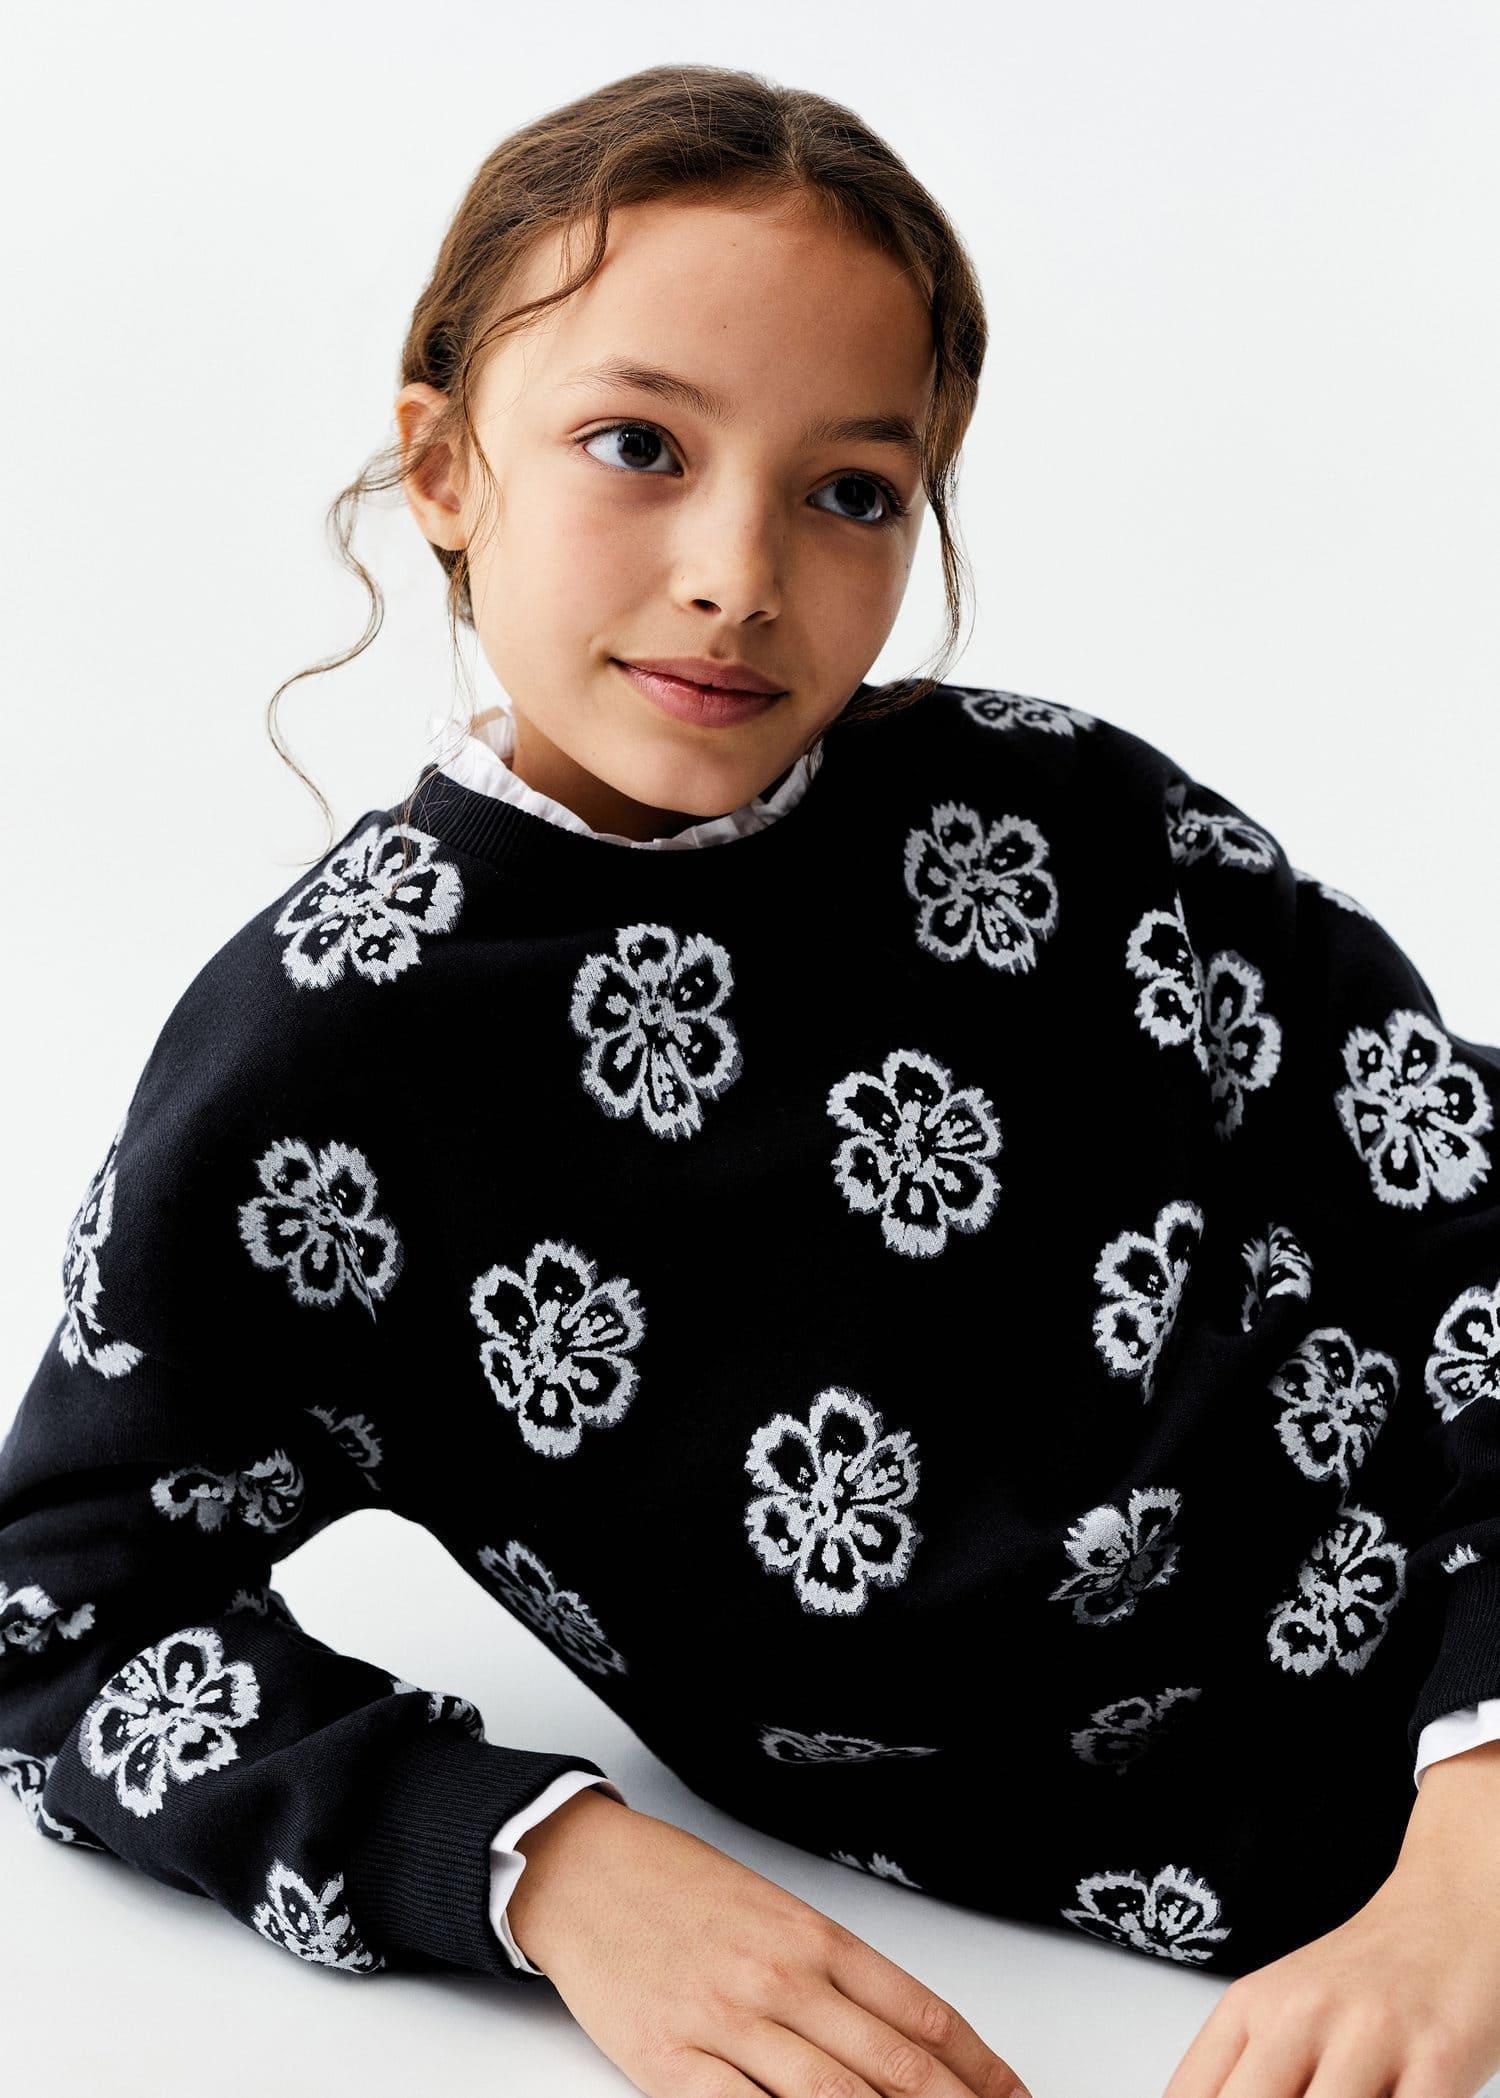 Mango - Navy Floral Printed Sweatshirt, Kids Girls